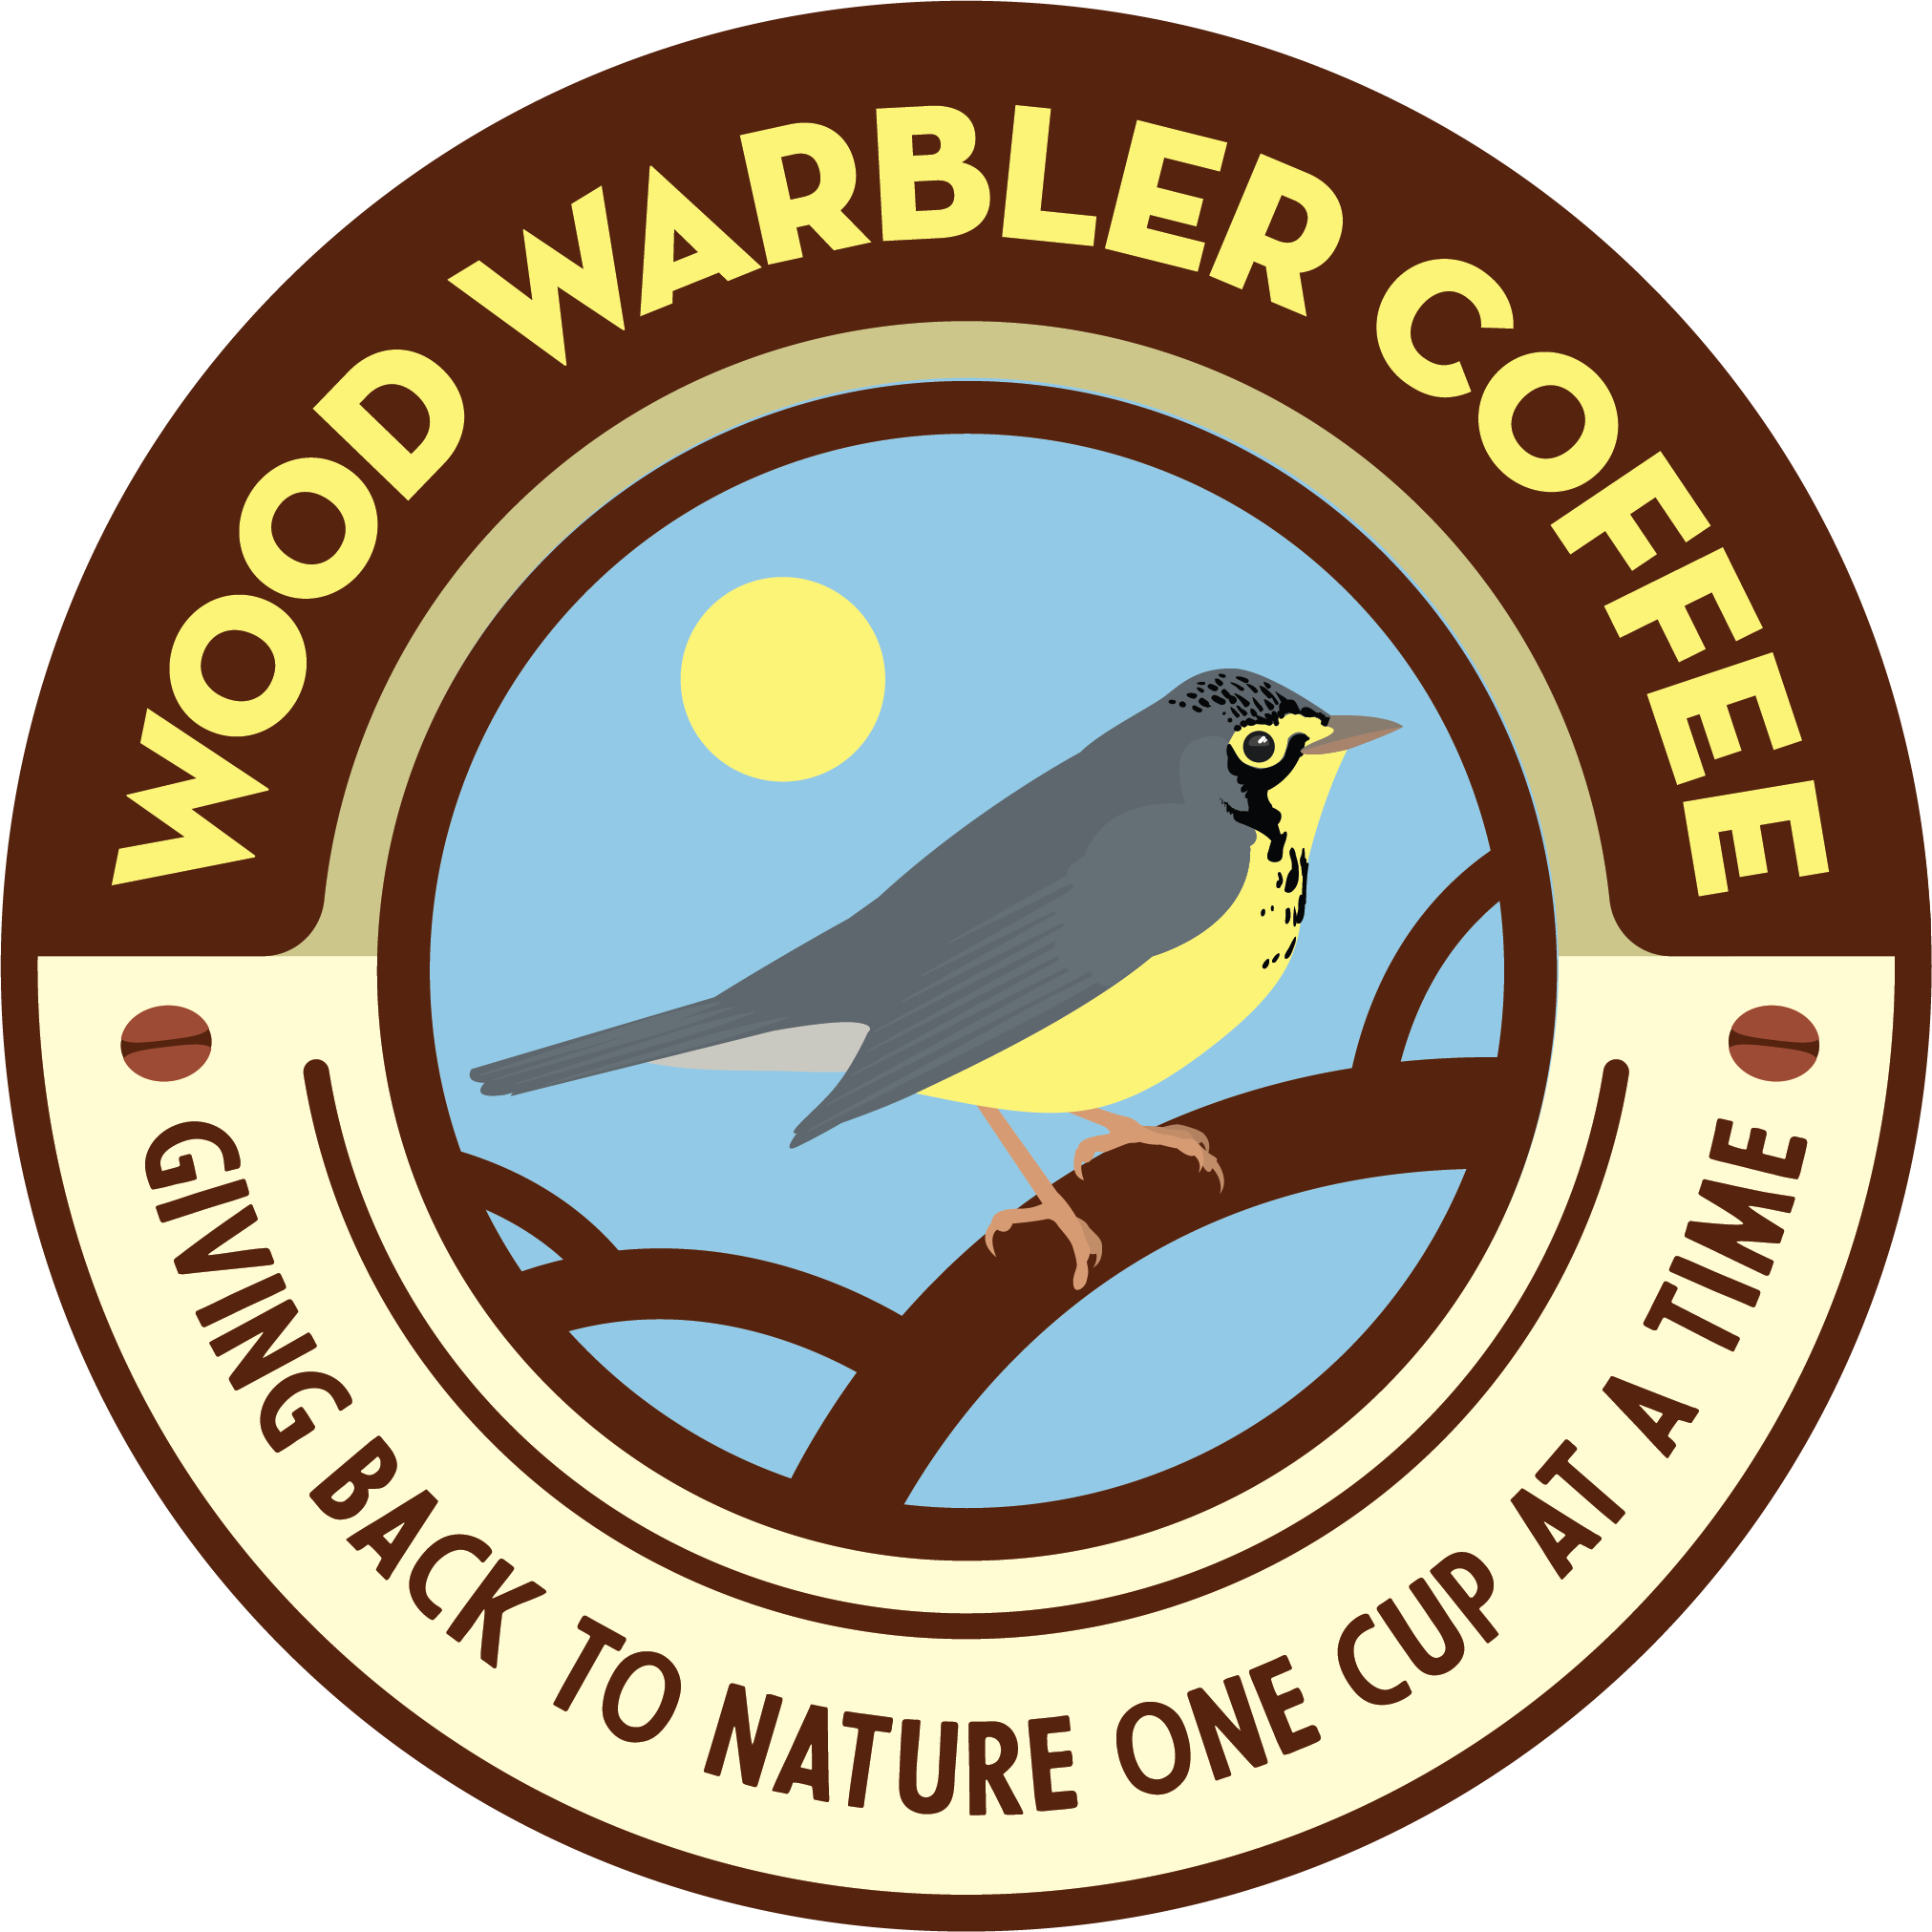 *Wood Warbler Coffee Gift Card